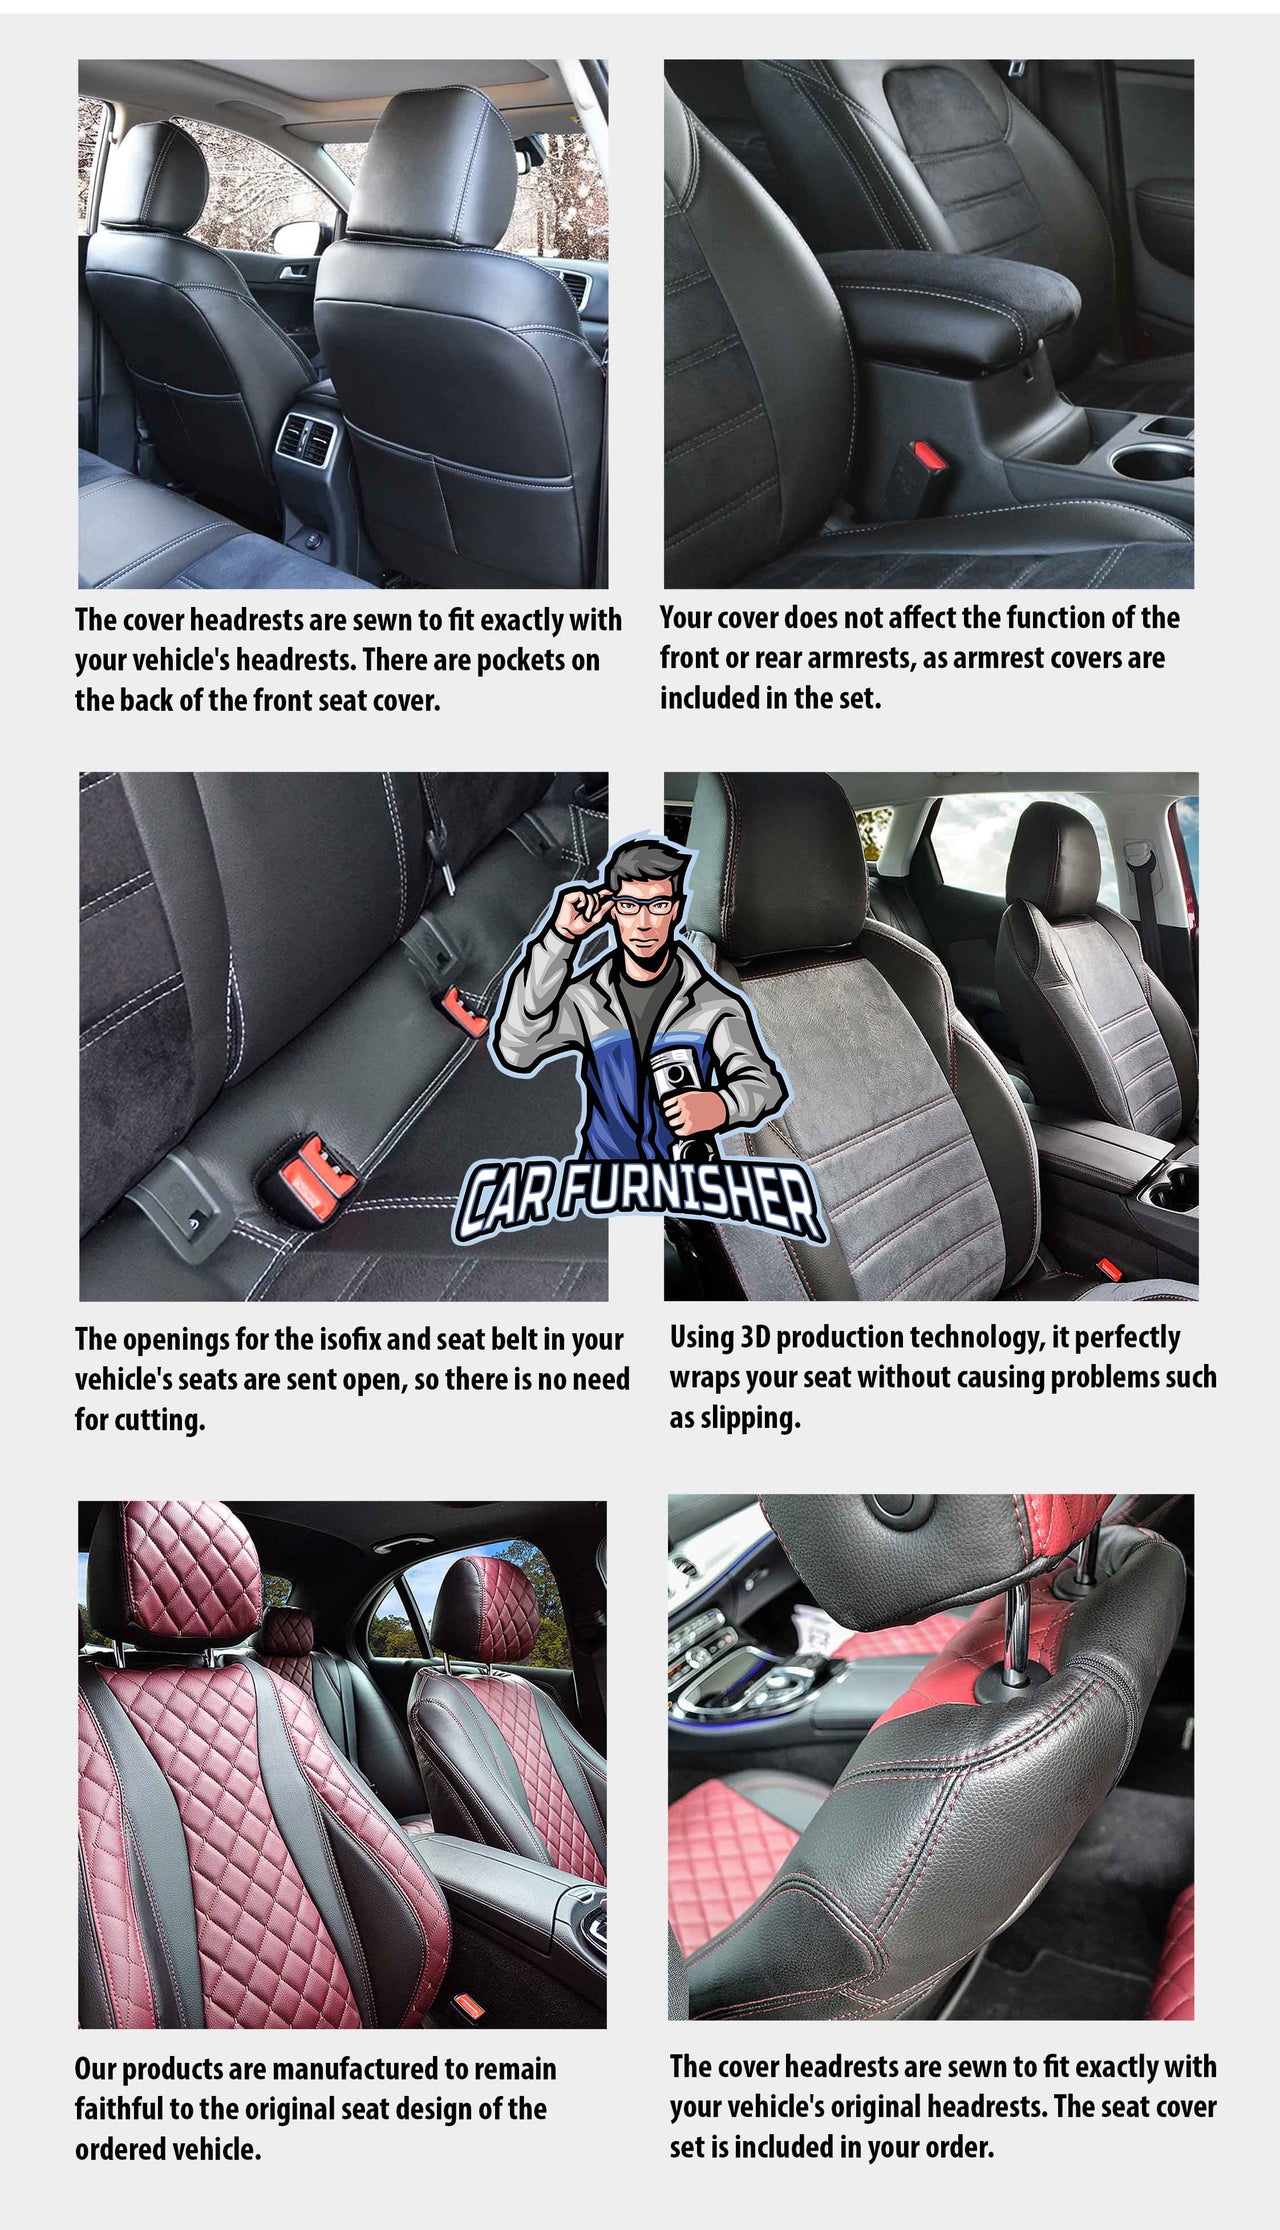 Subaru Legacy Seat Cover Istanbul Leather Design Burgundy Leather